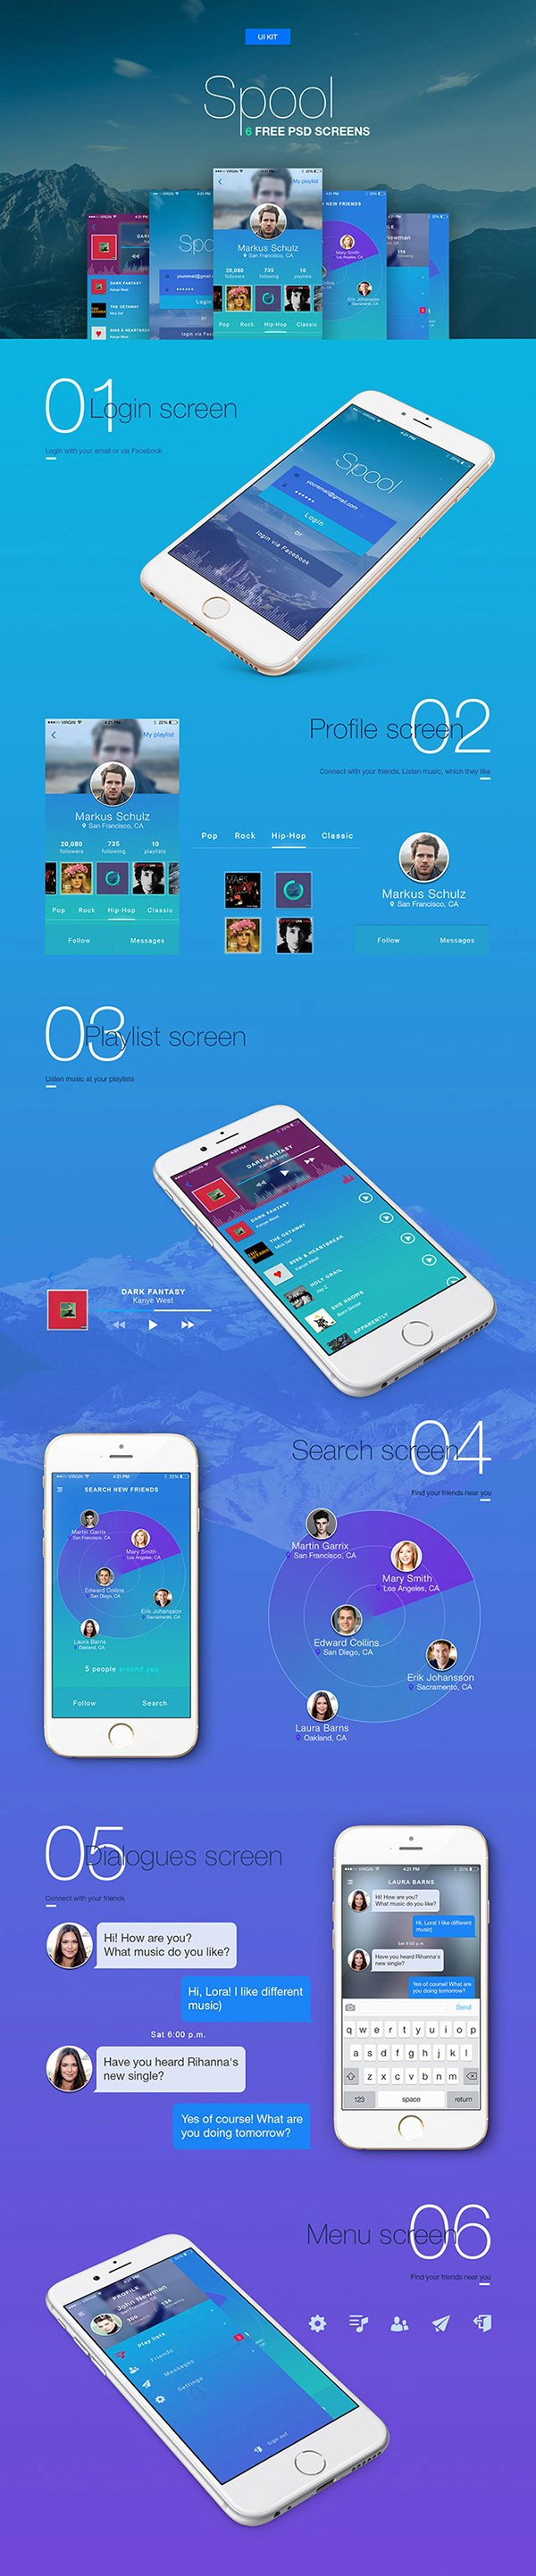 Spool - 6 Mobile UI Templates